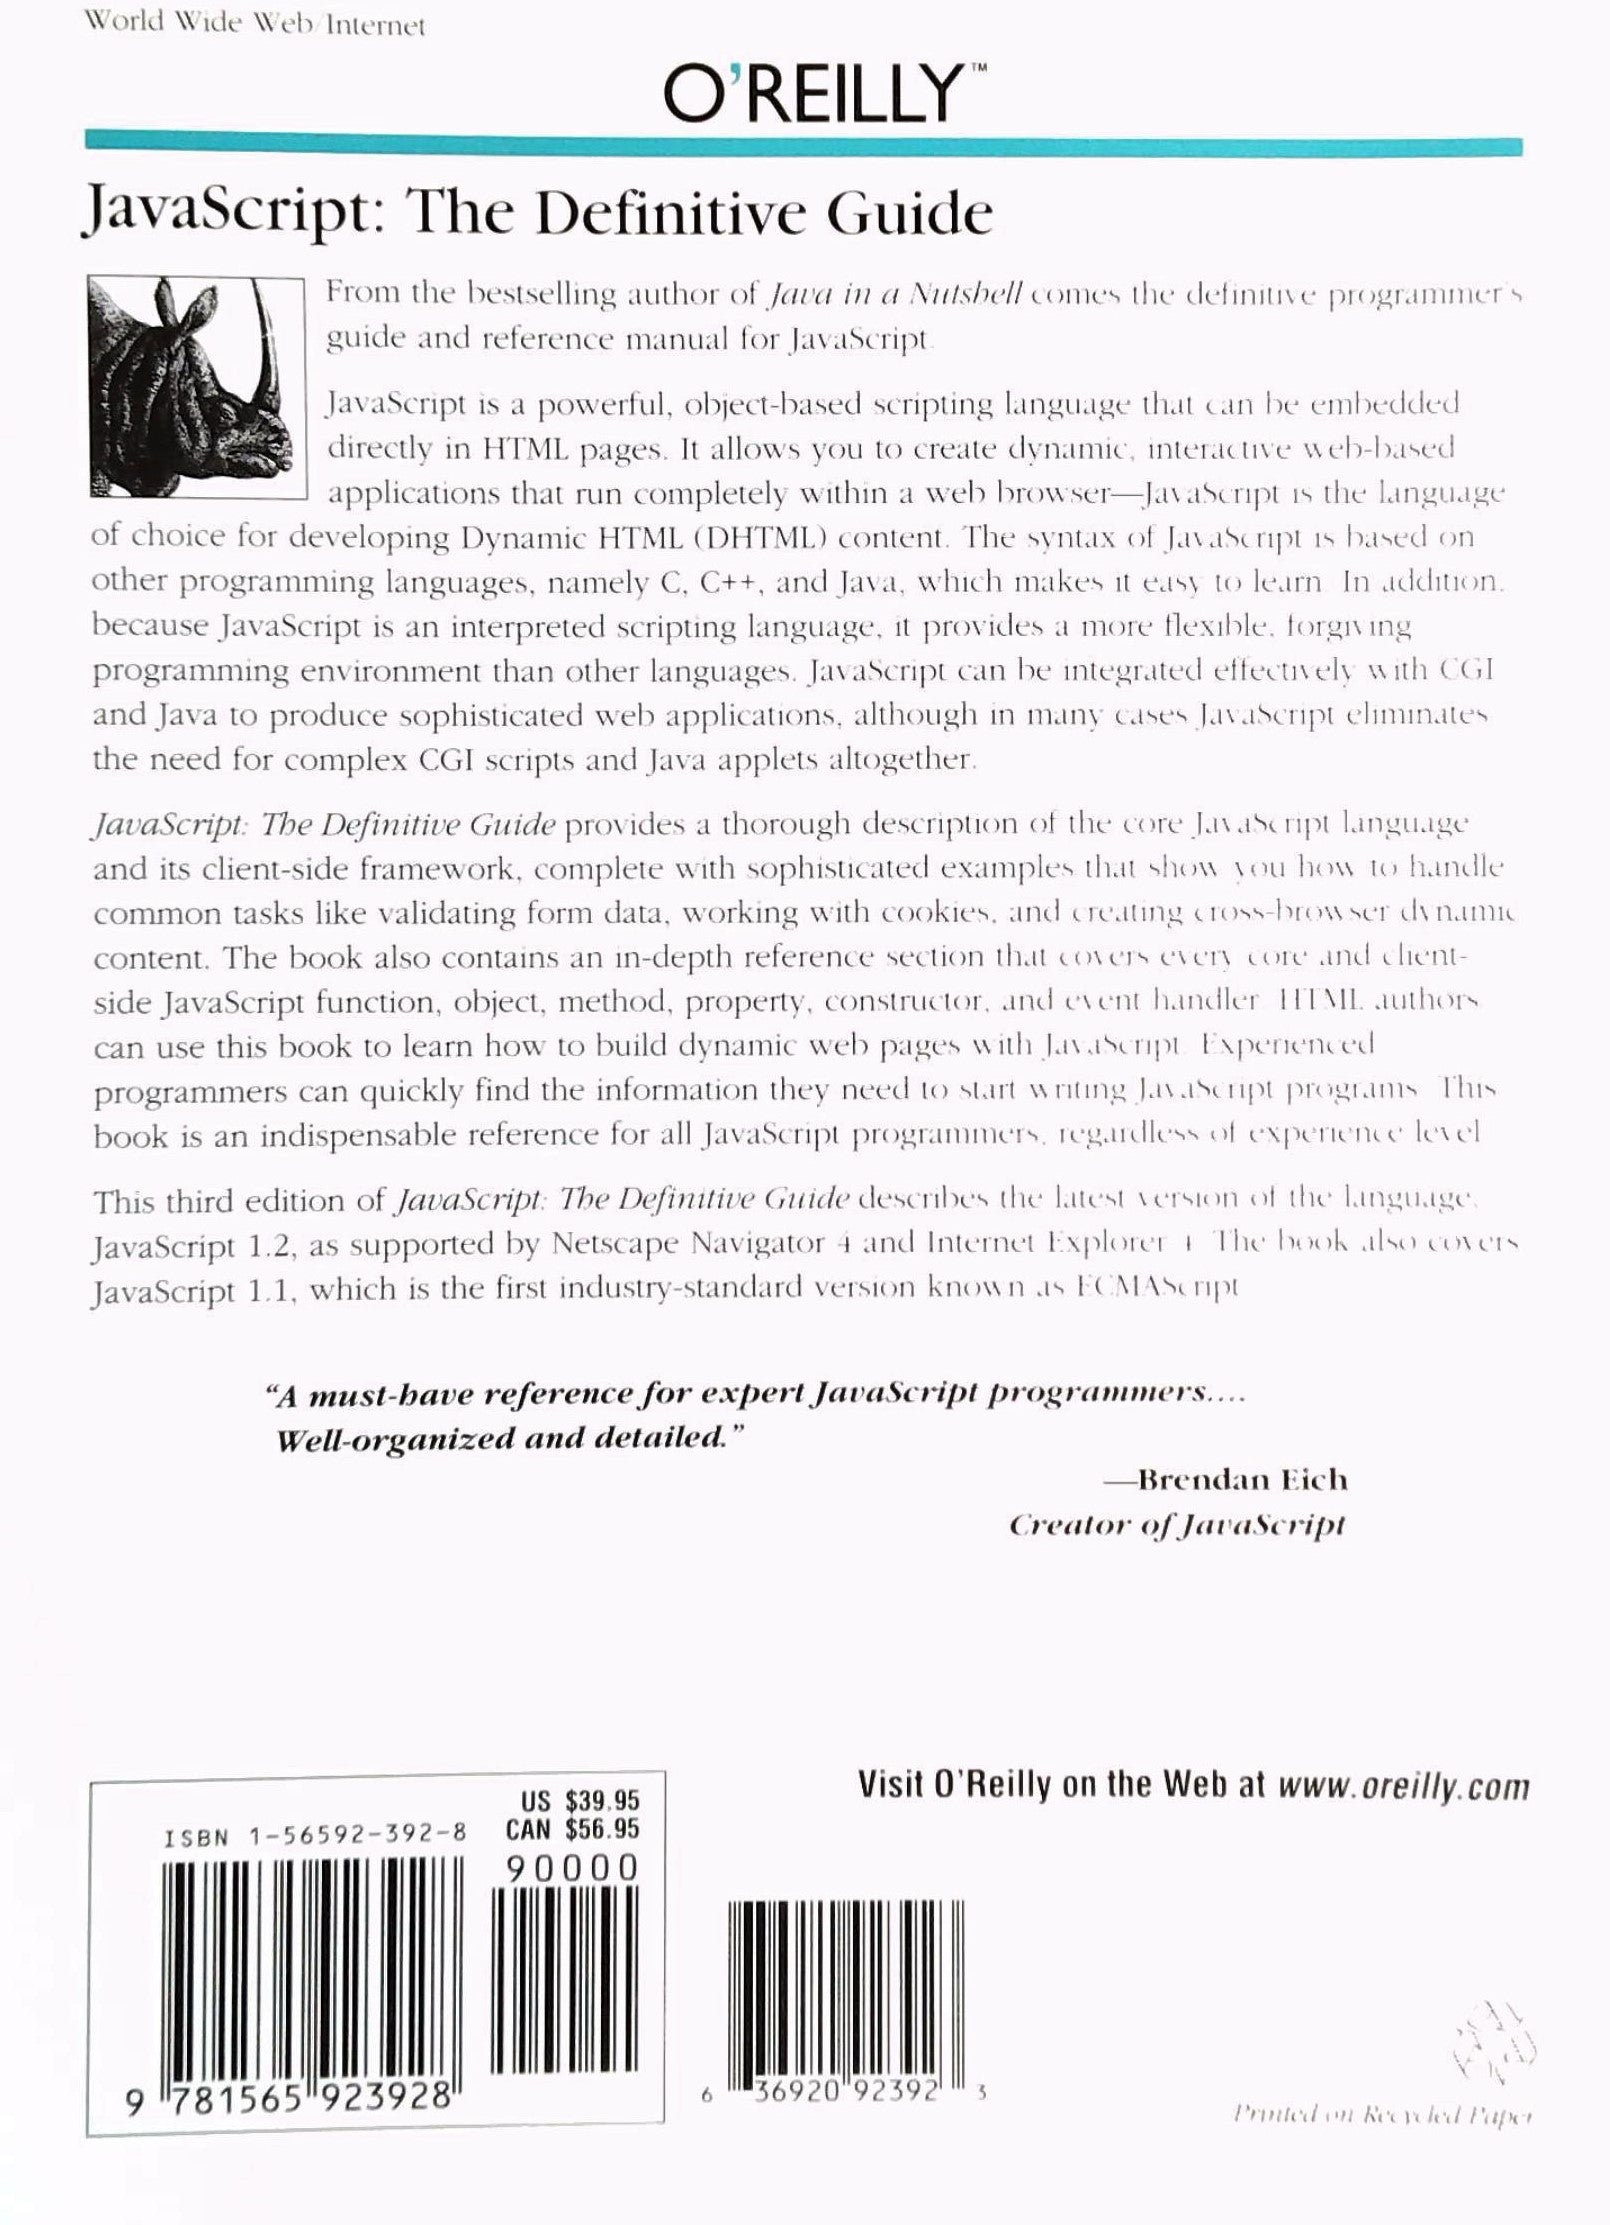 JavaScript : The Definitive Guide (3rd Edition) (David Flanagan)